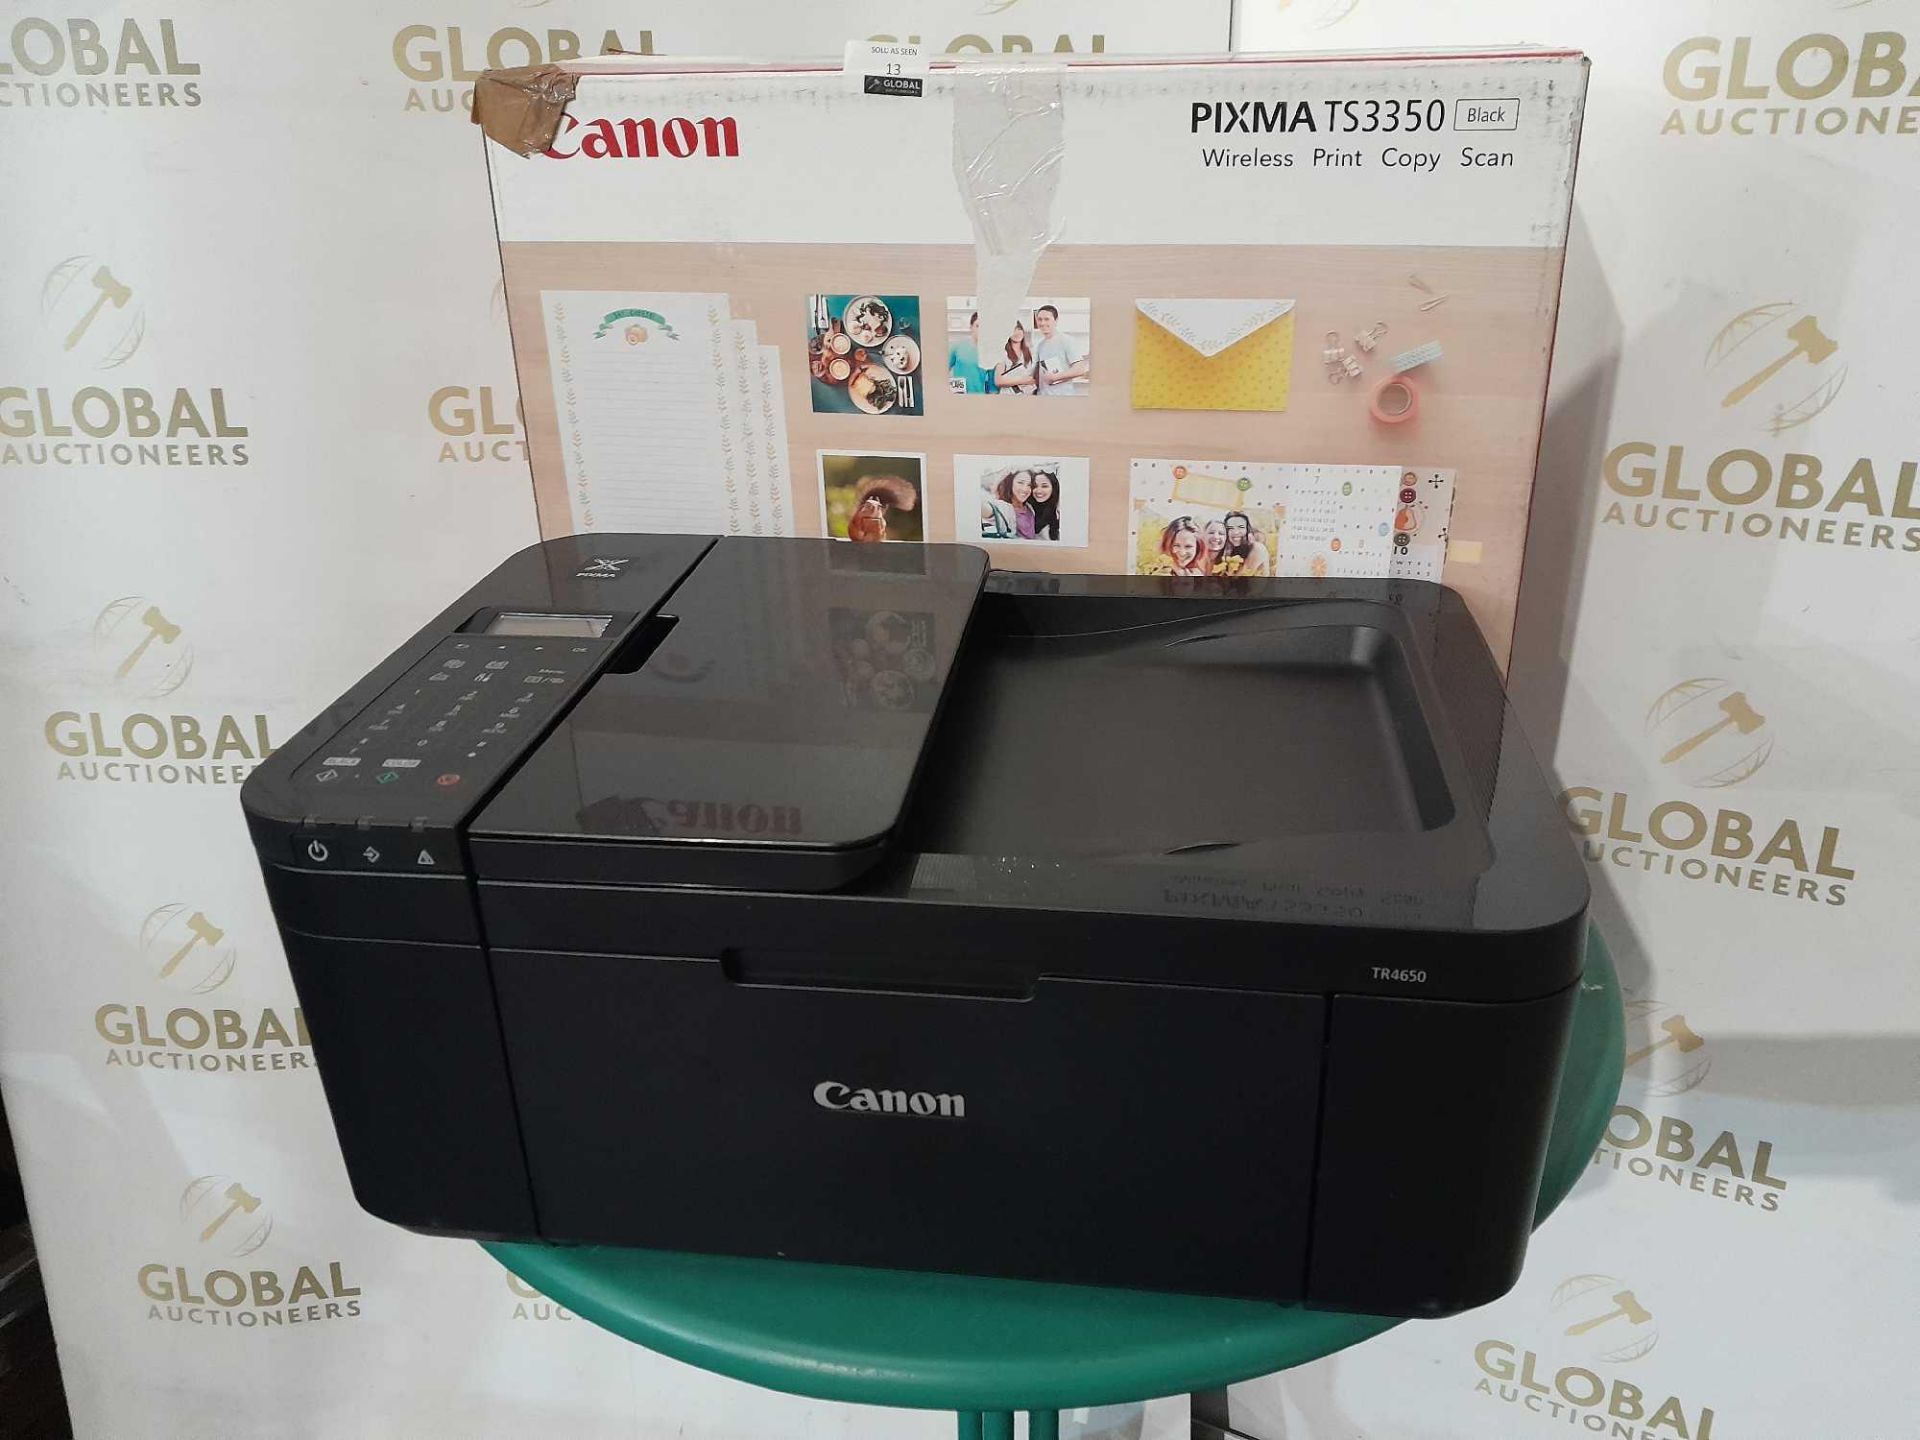 RRP £100 Boxed Pixma Ts3350 Wireless Printer And Canon Pixma All In One Printer - Image 2 of 2